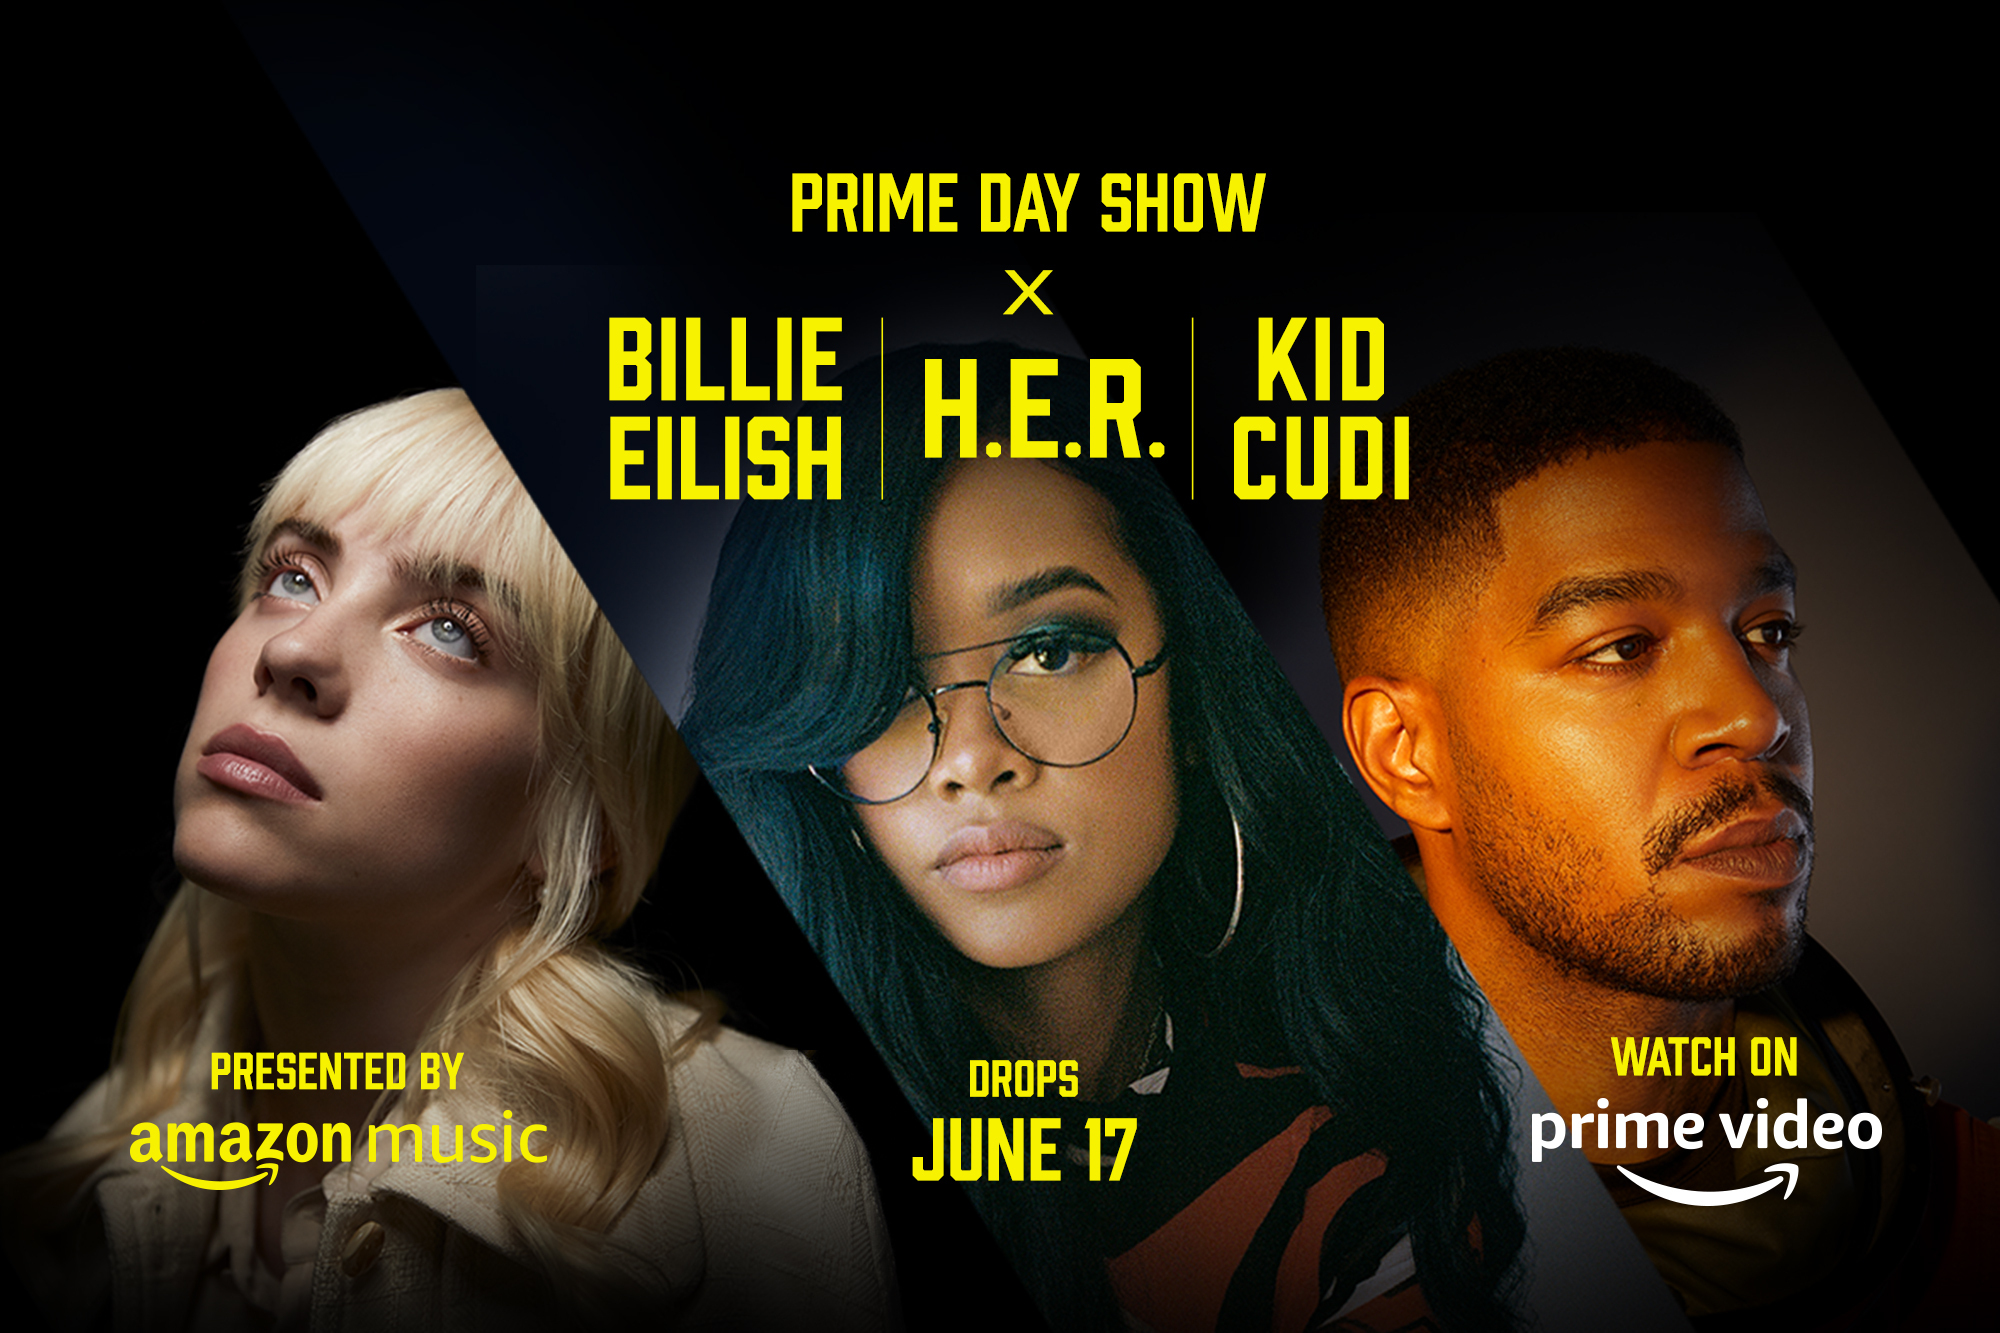 Amazon announces The Prime Day Show featuring Billie Eilish, H.E.R, and Kid Cudi